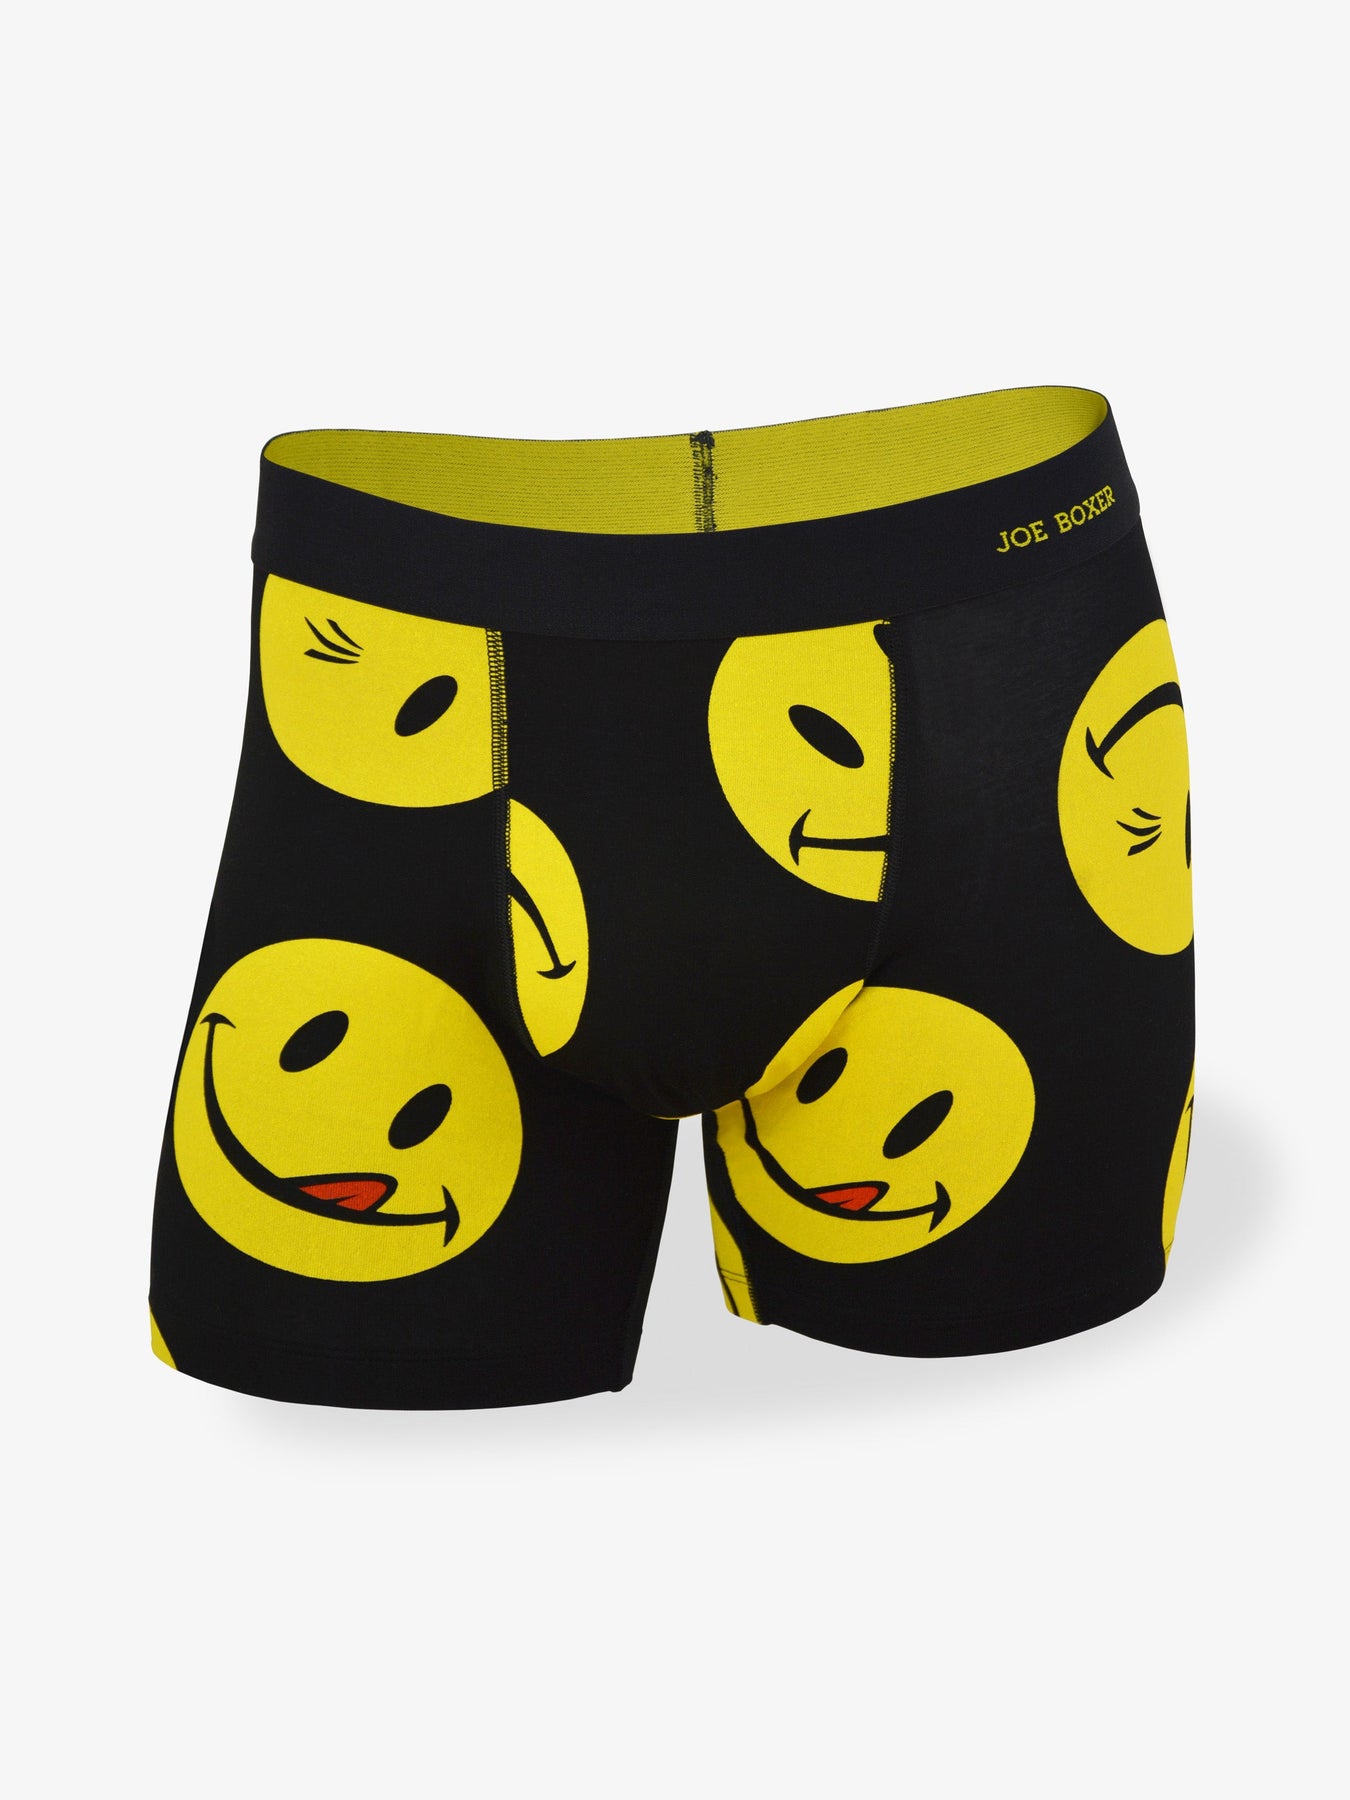 Plus Size Womens Underwear Joe Boxer Boyshort 5 Pack -  Singapore